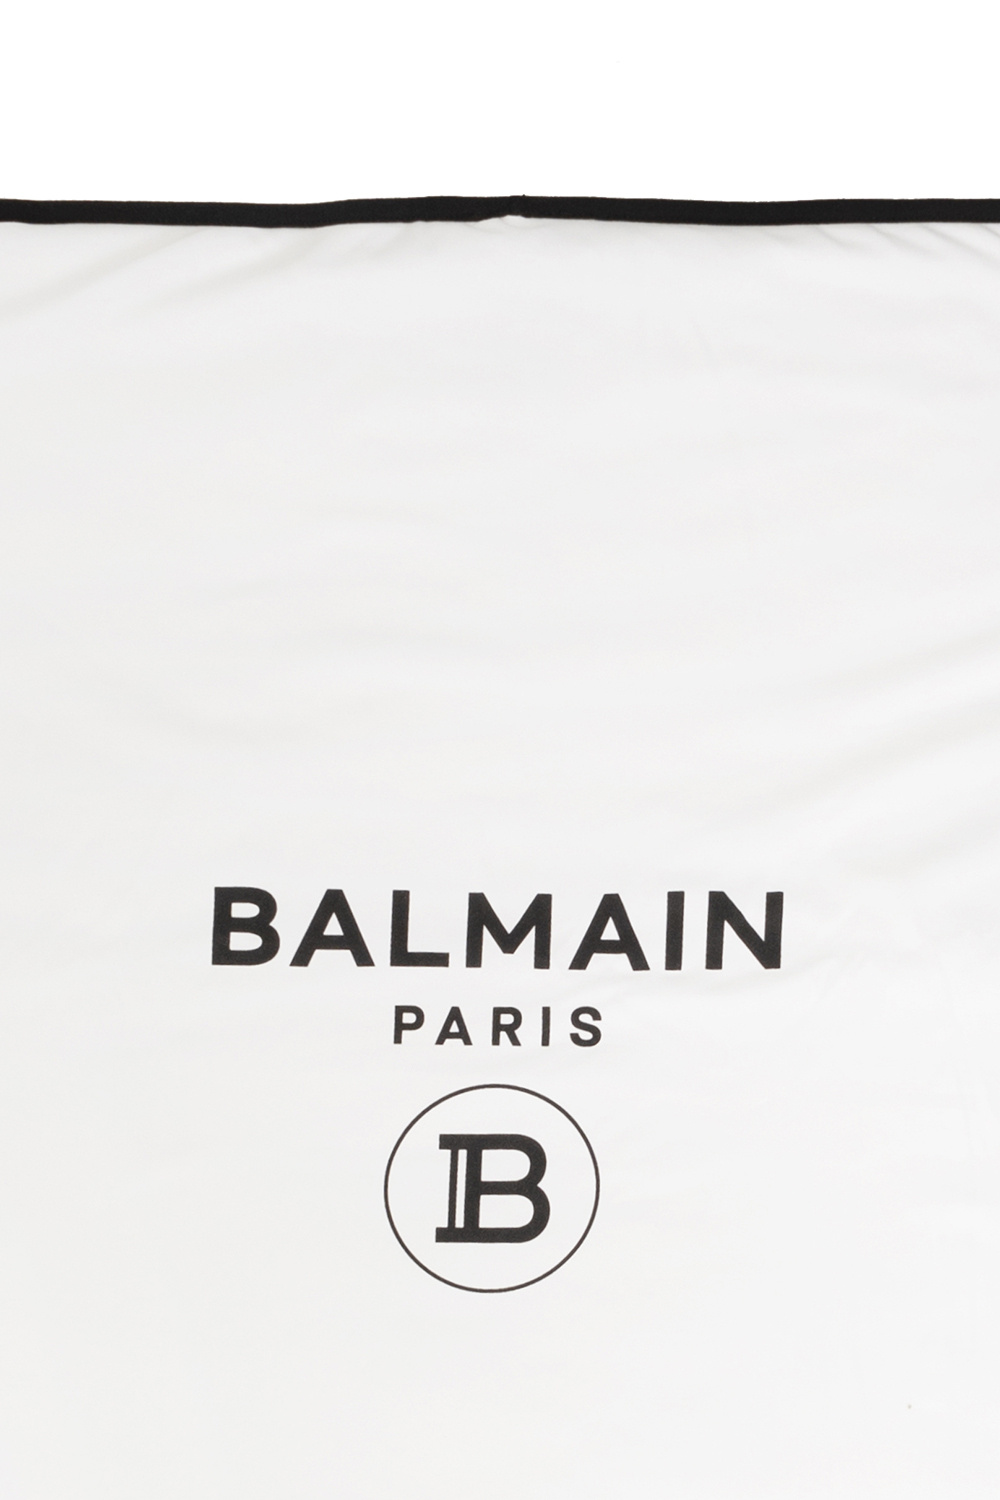 balmain cap Kids Baby blanket with logo